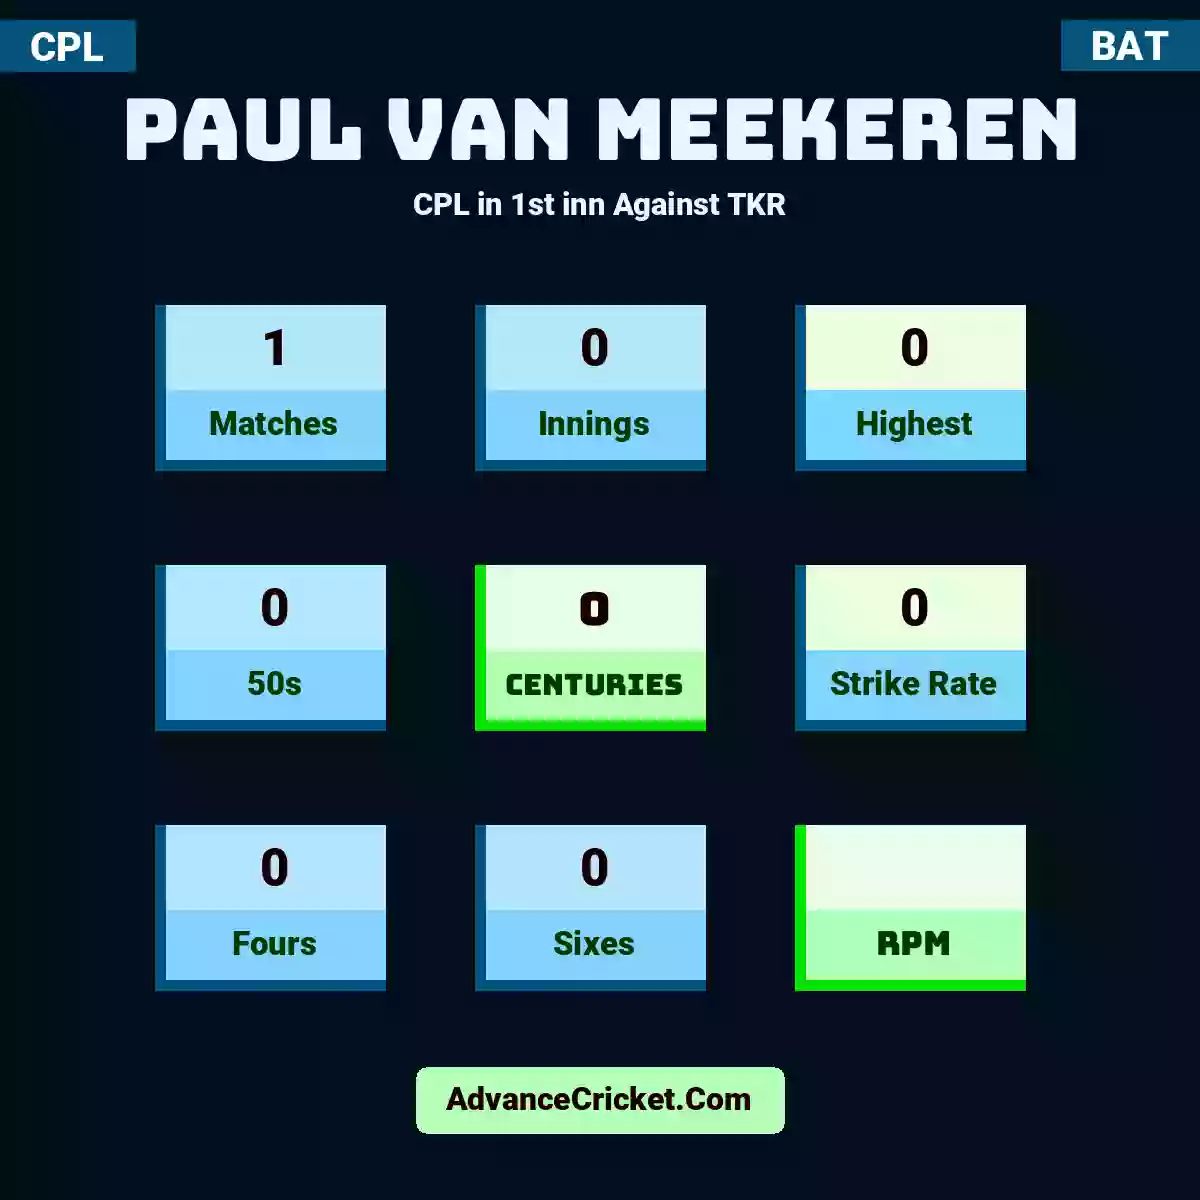 Paul van Meekeren CPL  in 1st inn Against TKR, Paul van Meekeren played 1 matches, scored 0 runs as highest, 0 half-centuries, and 0 centuries, with a strike rate of 0. P.Meekeren hit 0 fours and 0 sixes.